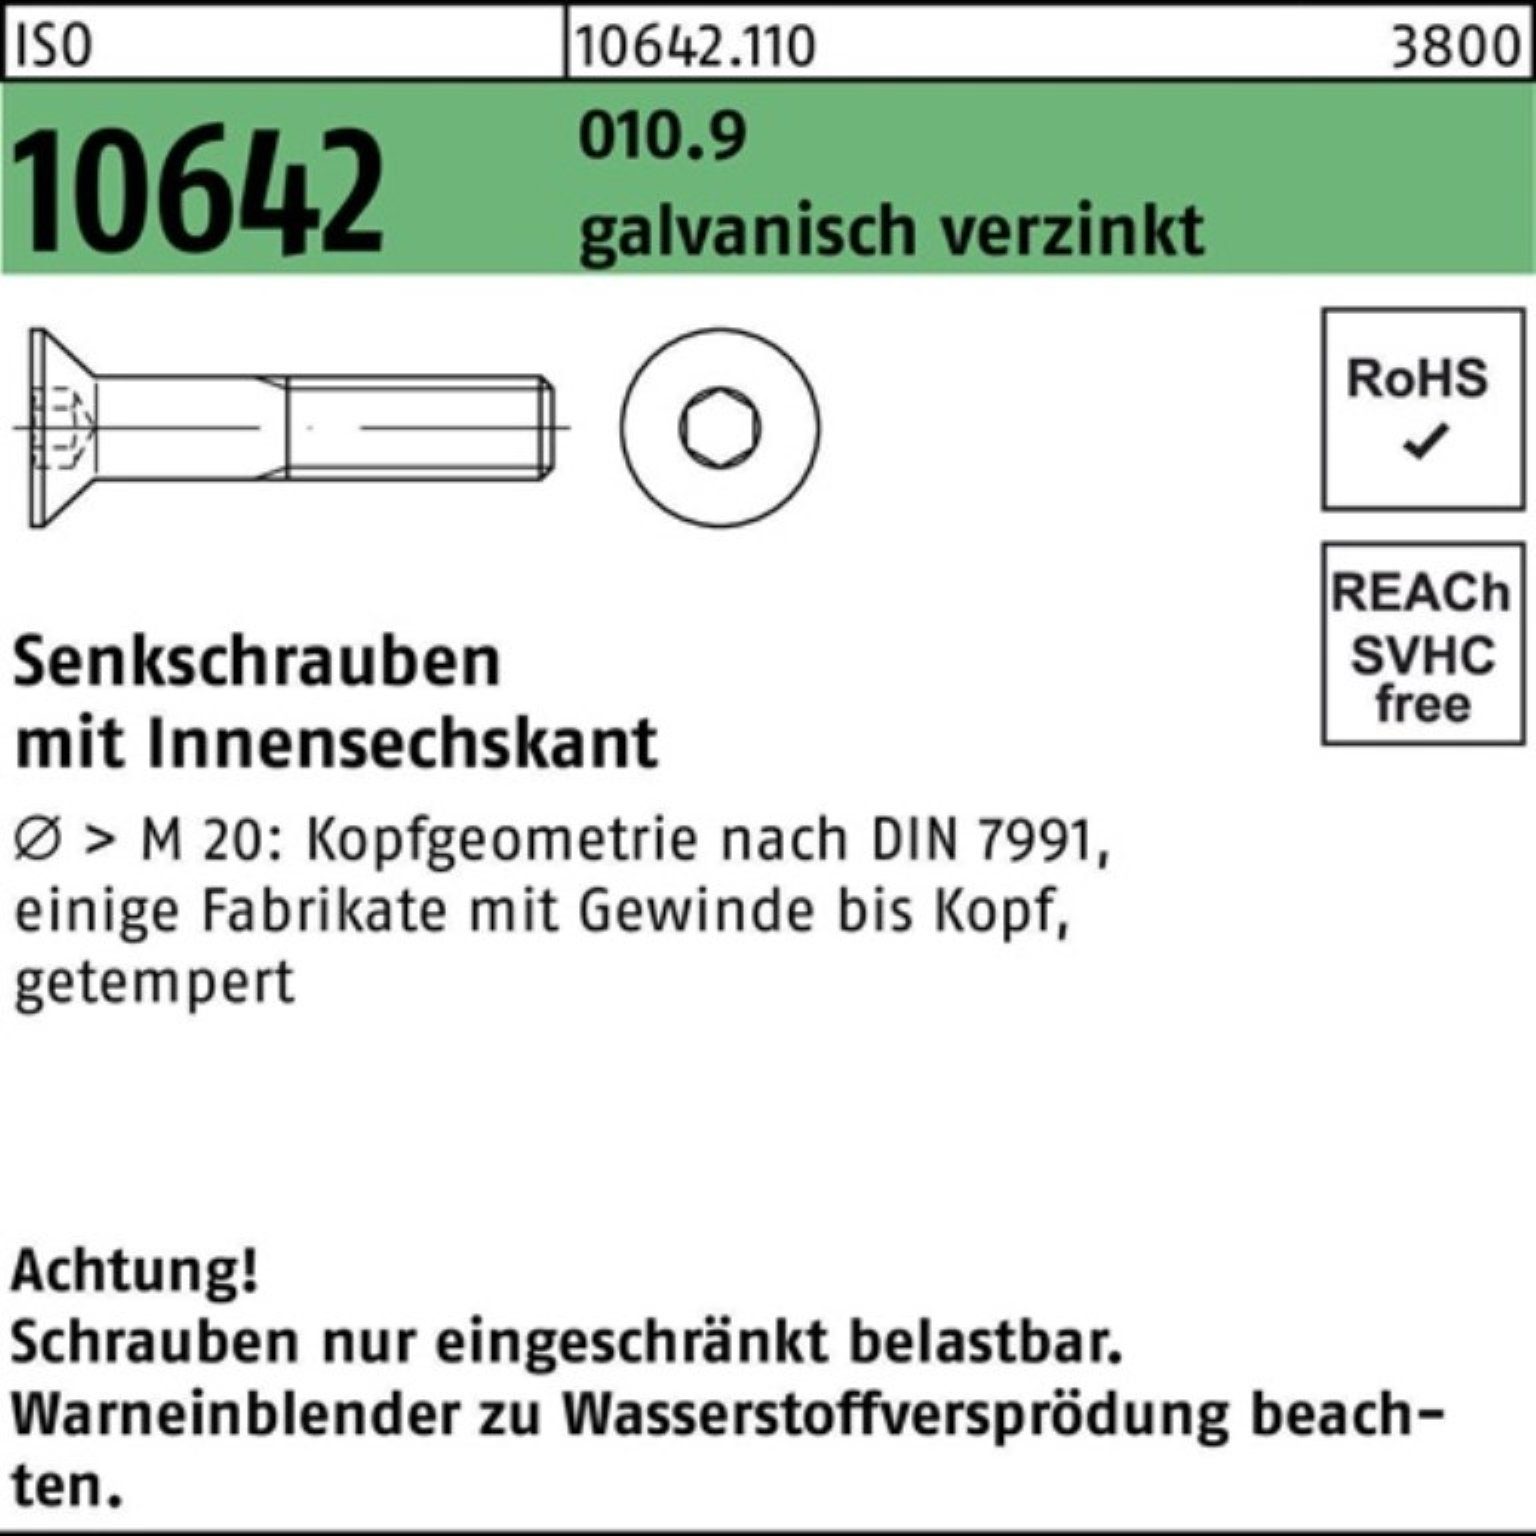 Reyher Senkschraube 200er Pack Senkschraube M8x 10642 galv.verz. Innen-6kt 50 010.9 ISO 20